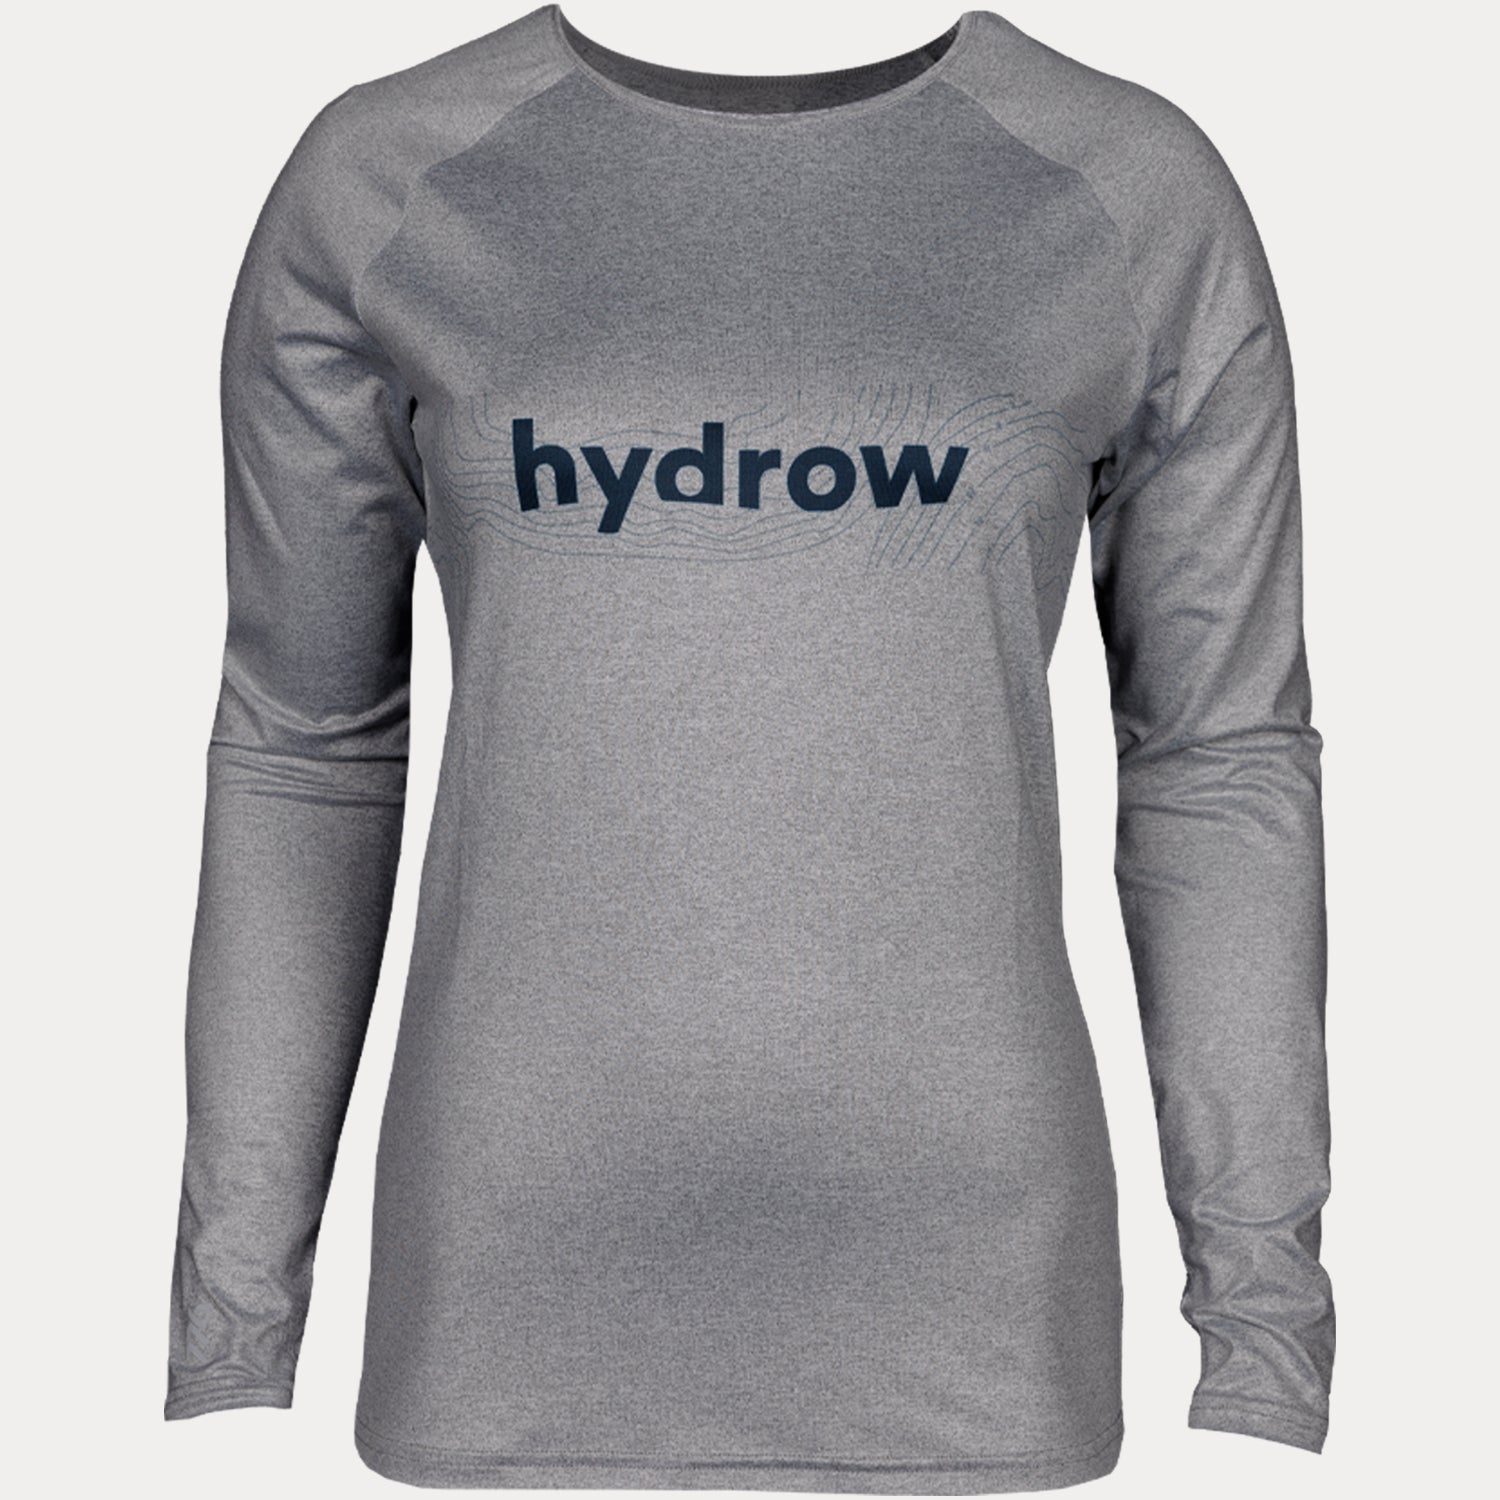 Grey women's longsleeve shirt with dark blue hydrow logo on chest